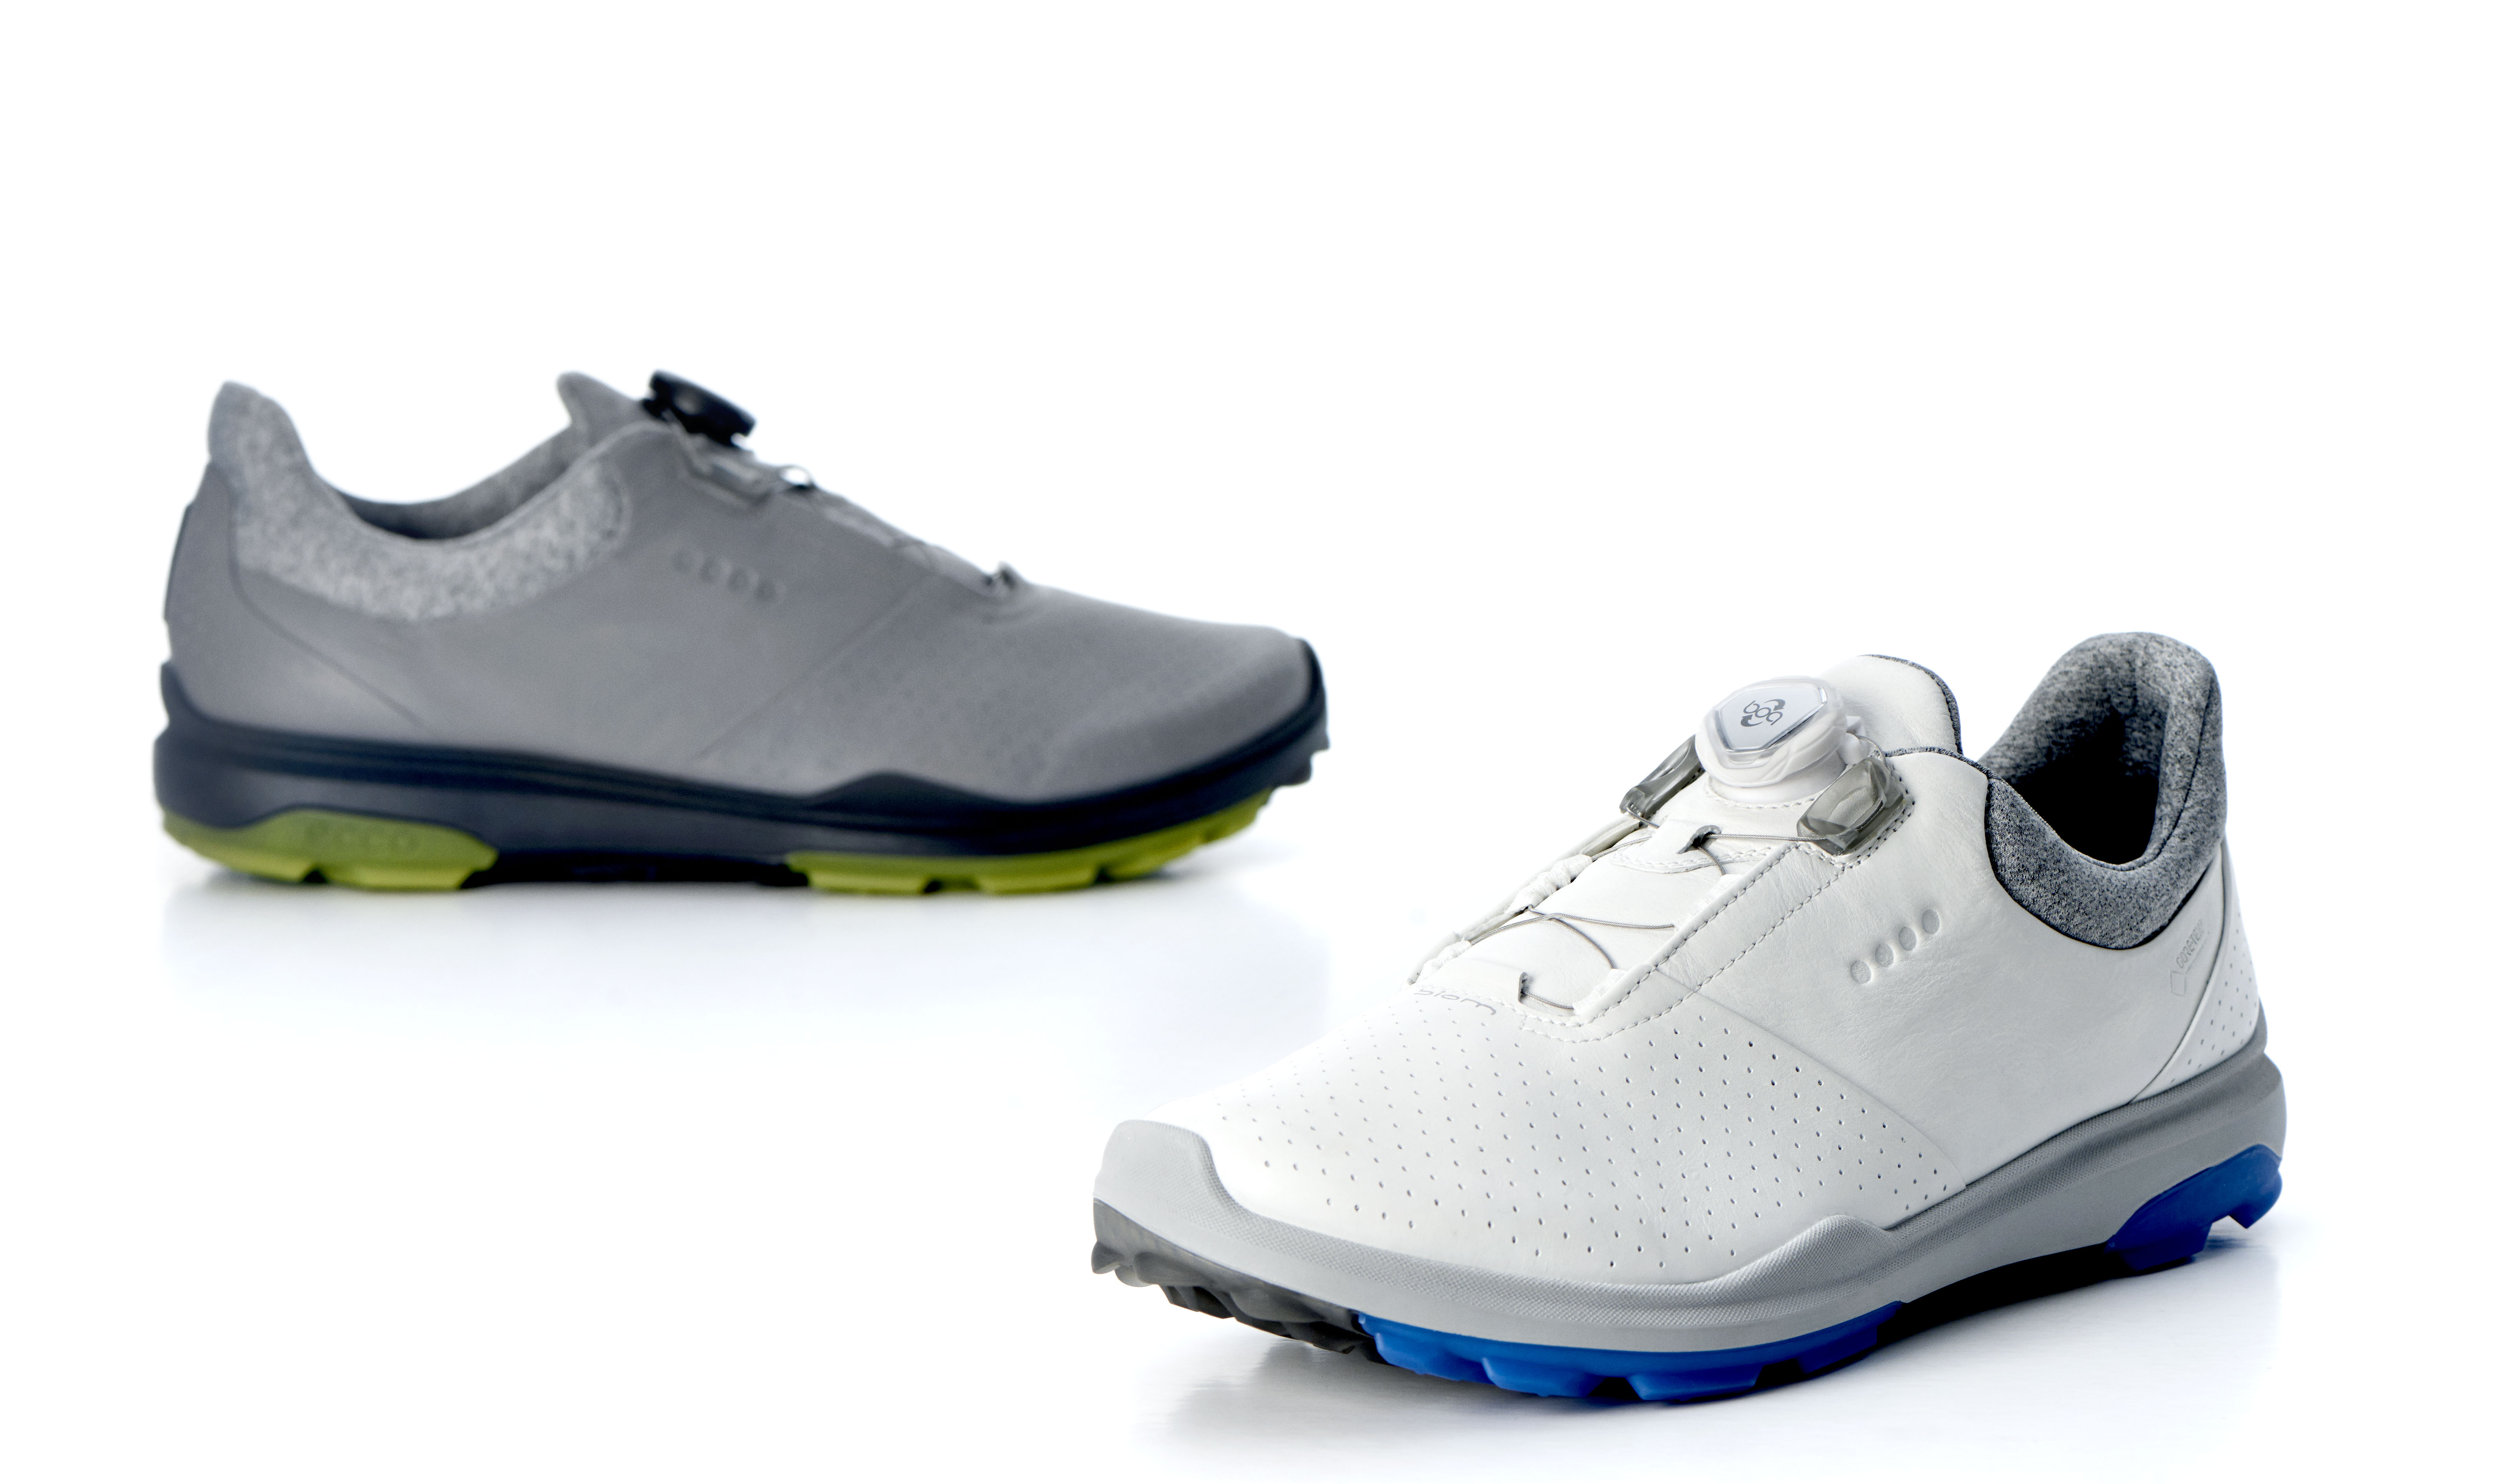 ECCO launches men's Biom Hybrid 3 golf shoe